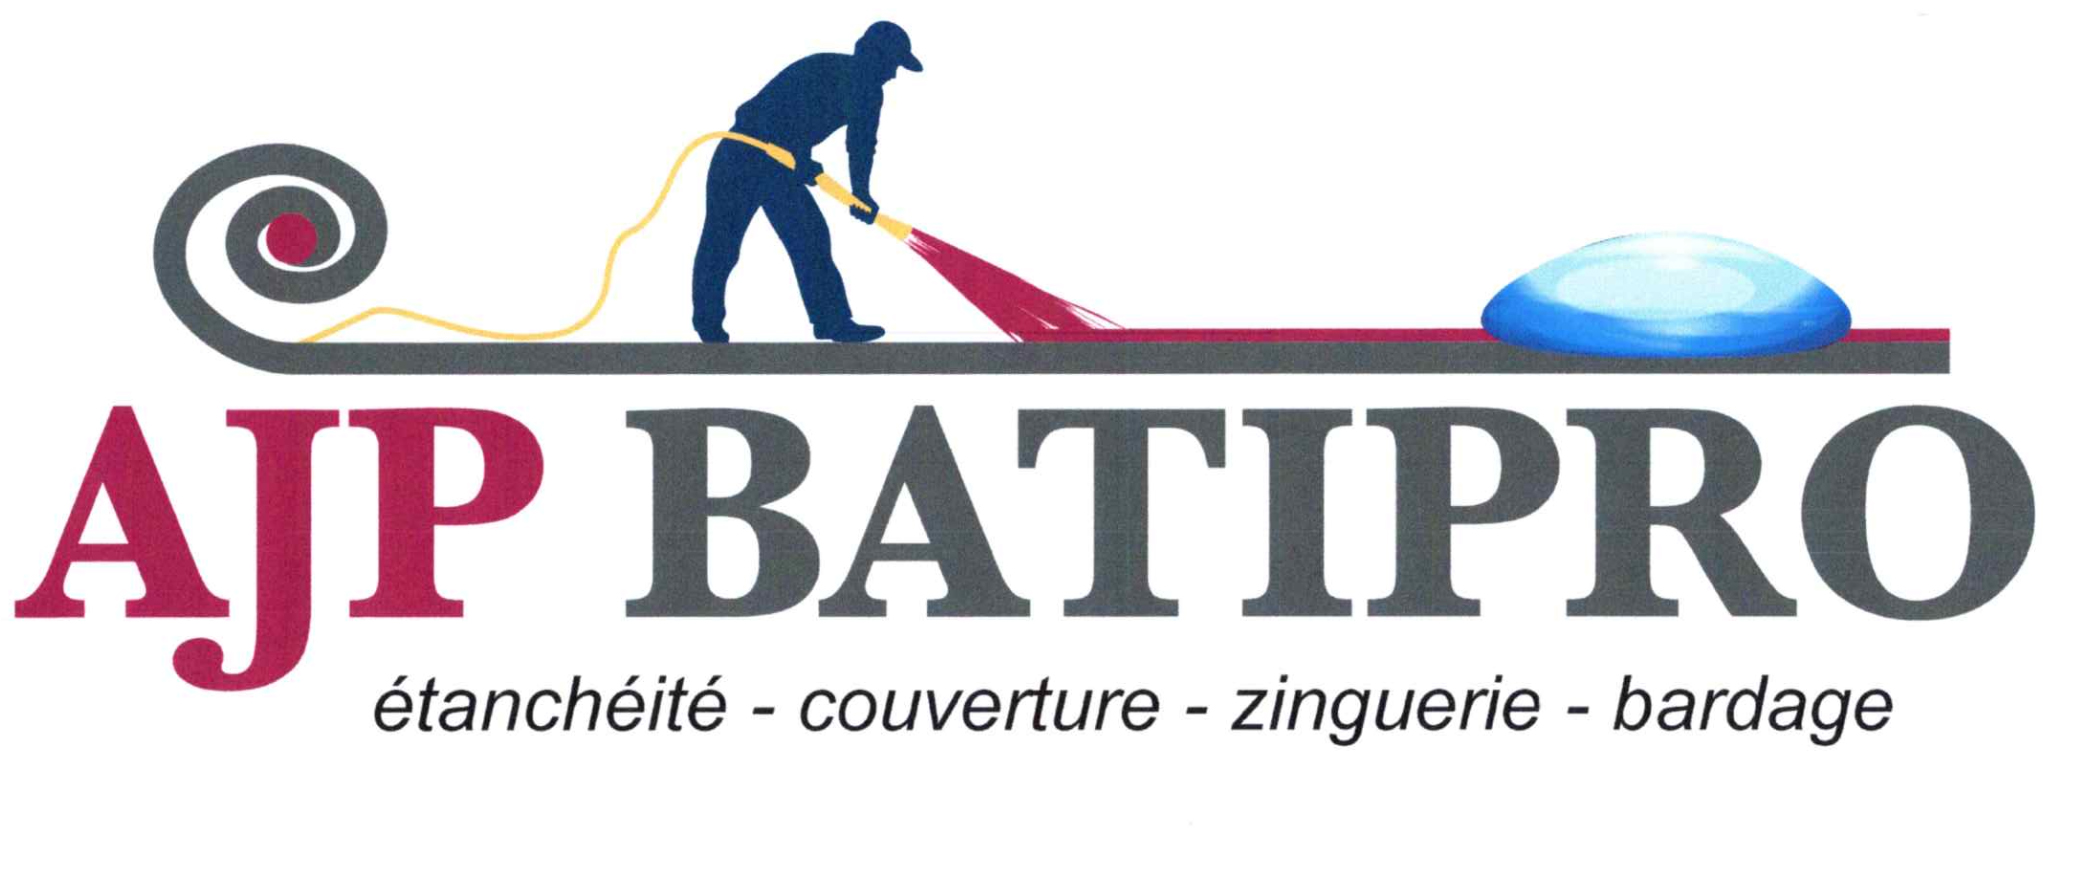 AJP BATIPRO logo